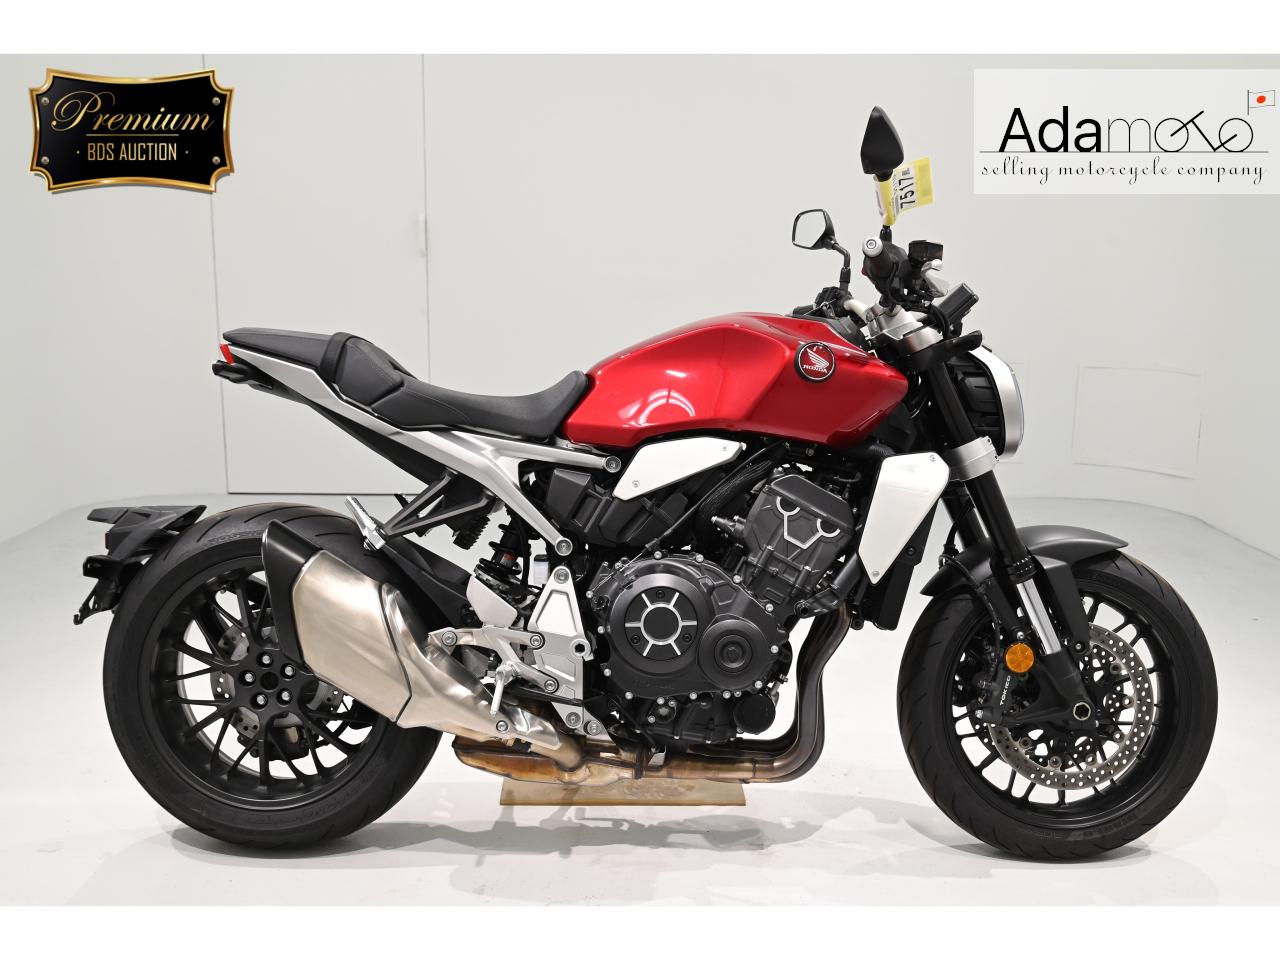 Honda CB1000R 2 - Adamoto - Motorcycles from Japan